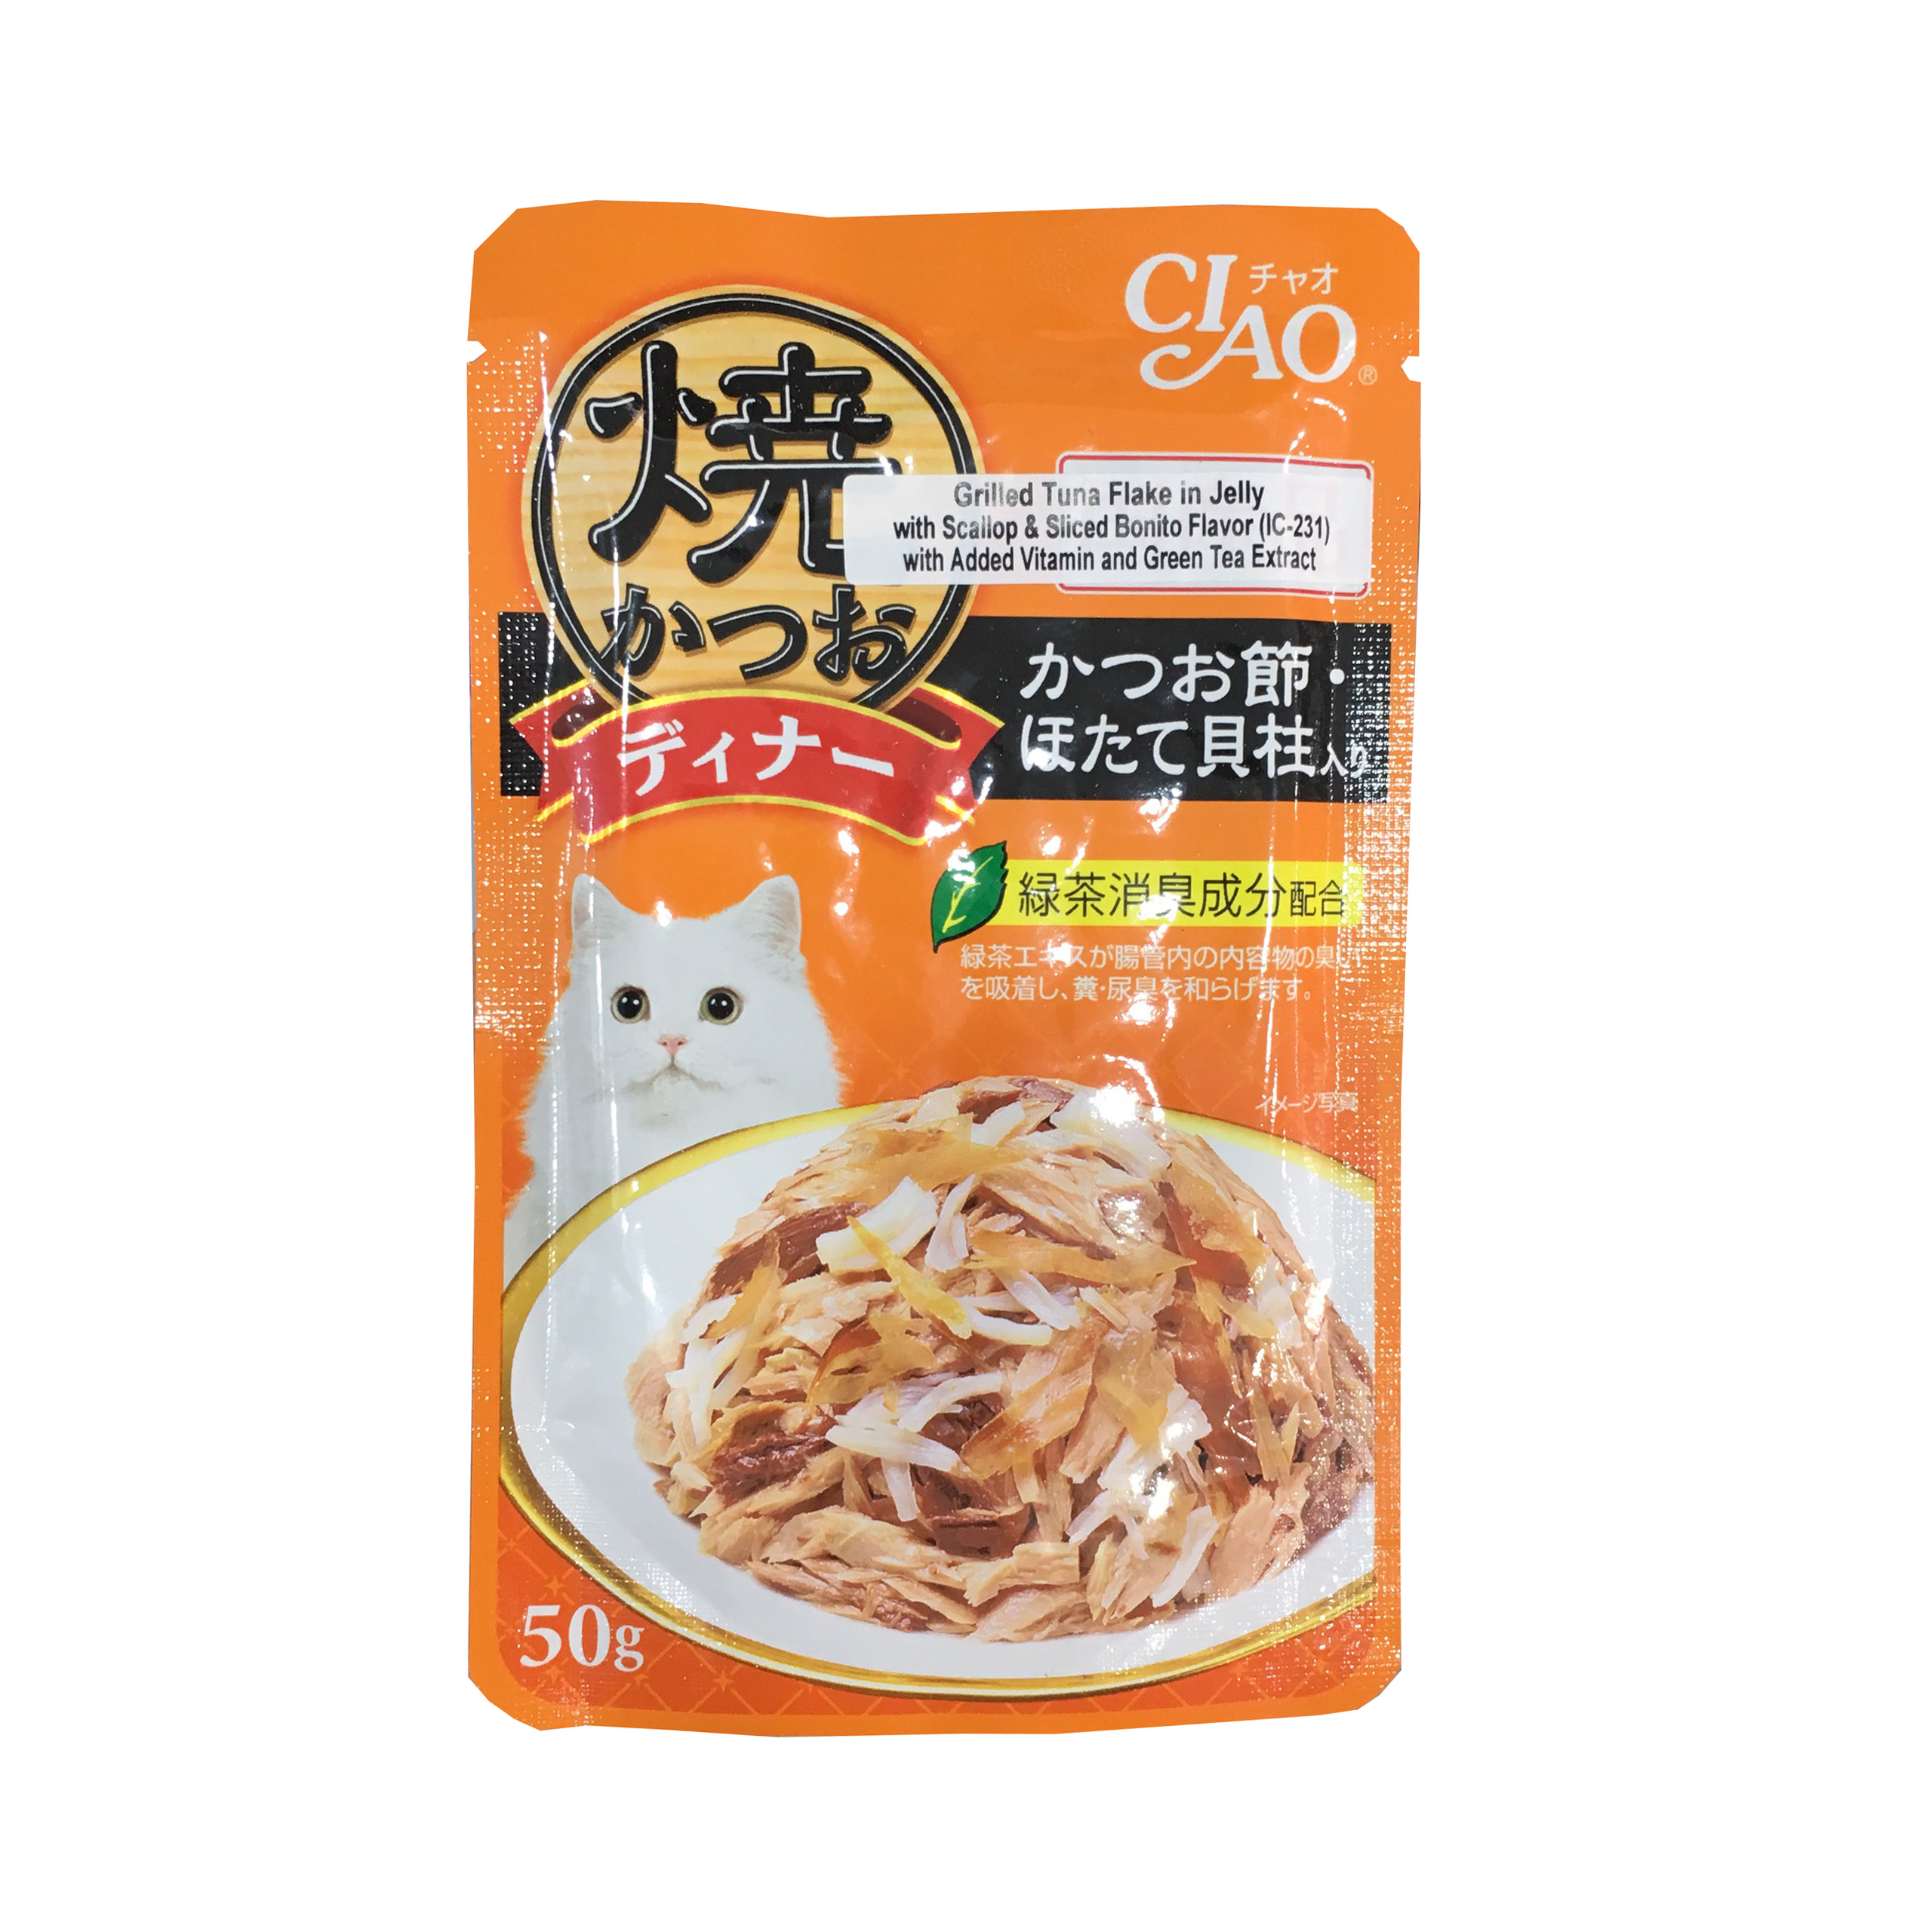 [IC-231] Pate Ciao cho mèo vị Grilled Tuna Flake in Jelly with Scallop & Sliced Bonito 50g